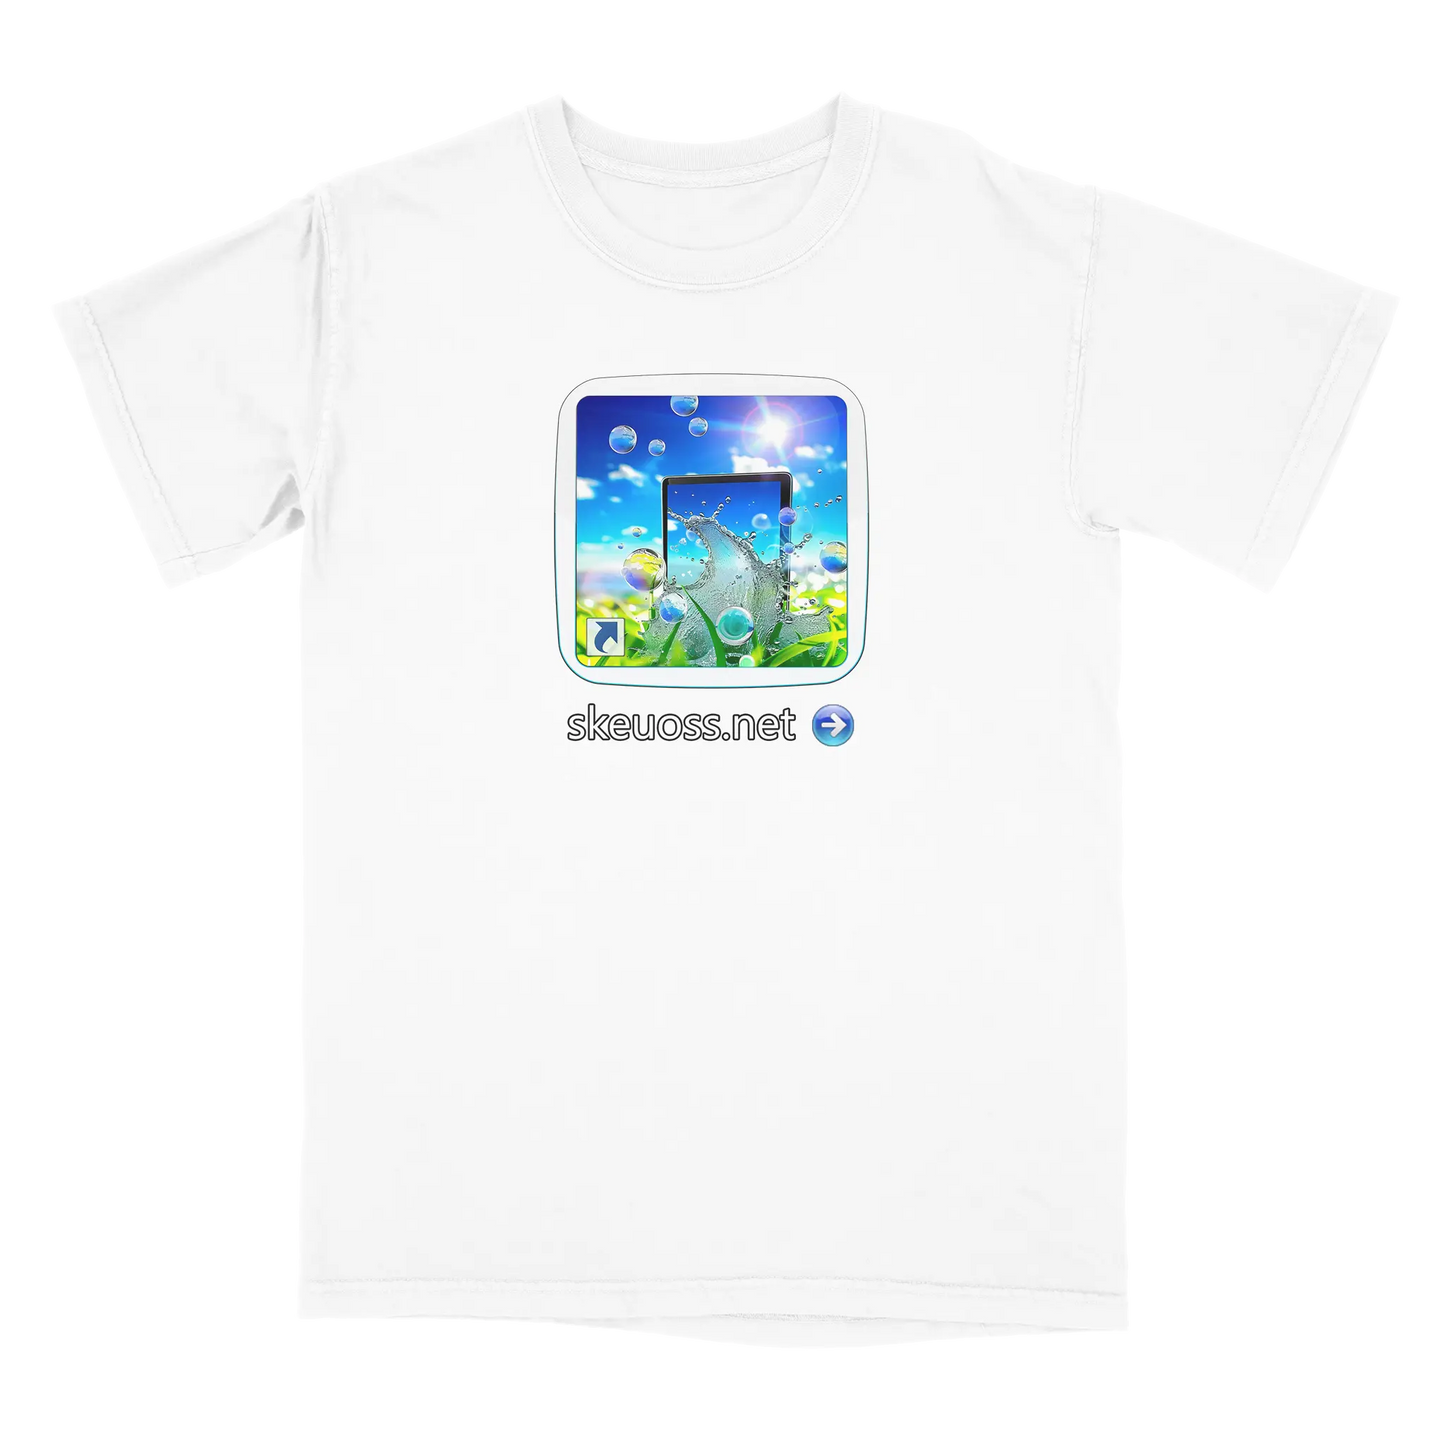 Frutiger Aero T-shirt - User Login Collection - User 274